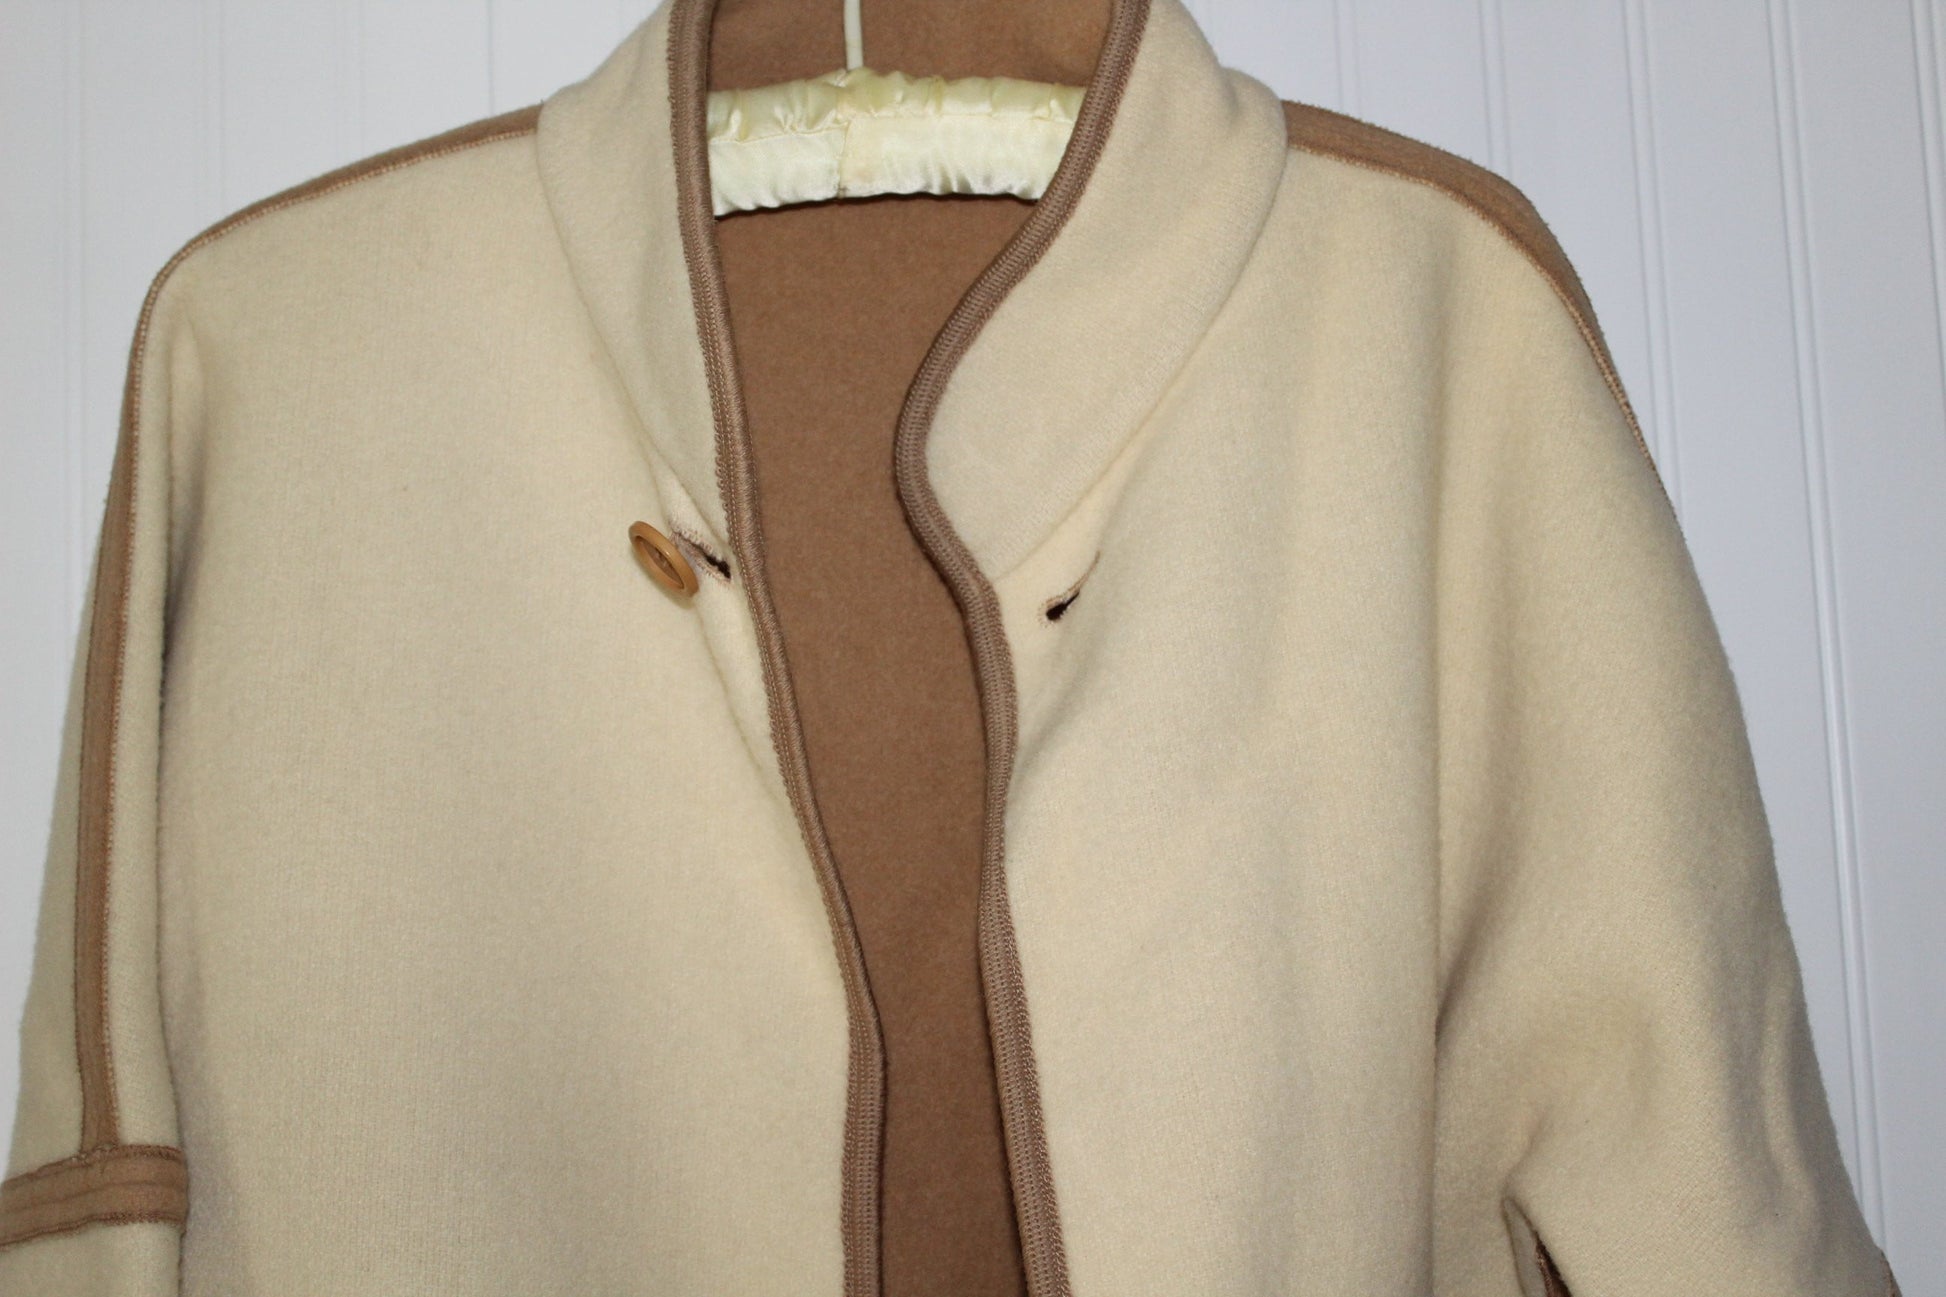 Cuddlecoat Turnaround Jacket Reversible Wool Cream Tan Medium Fits like Large big